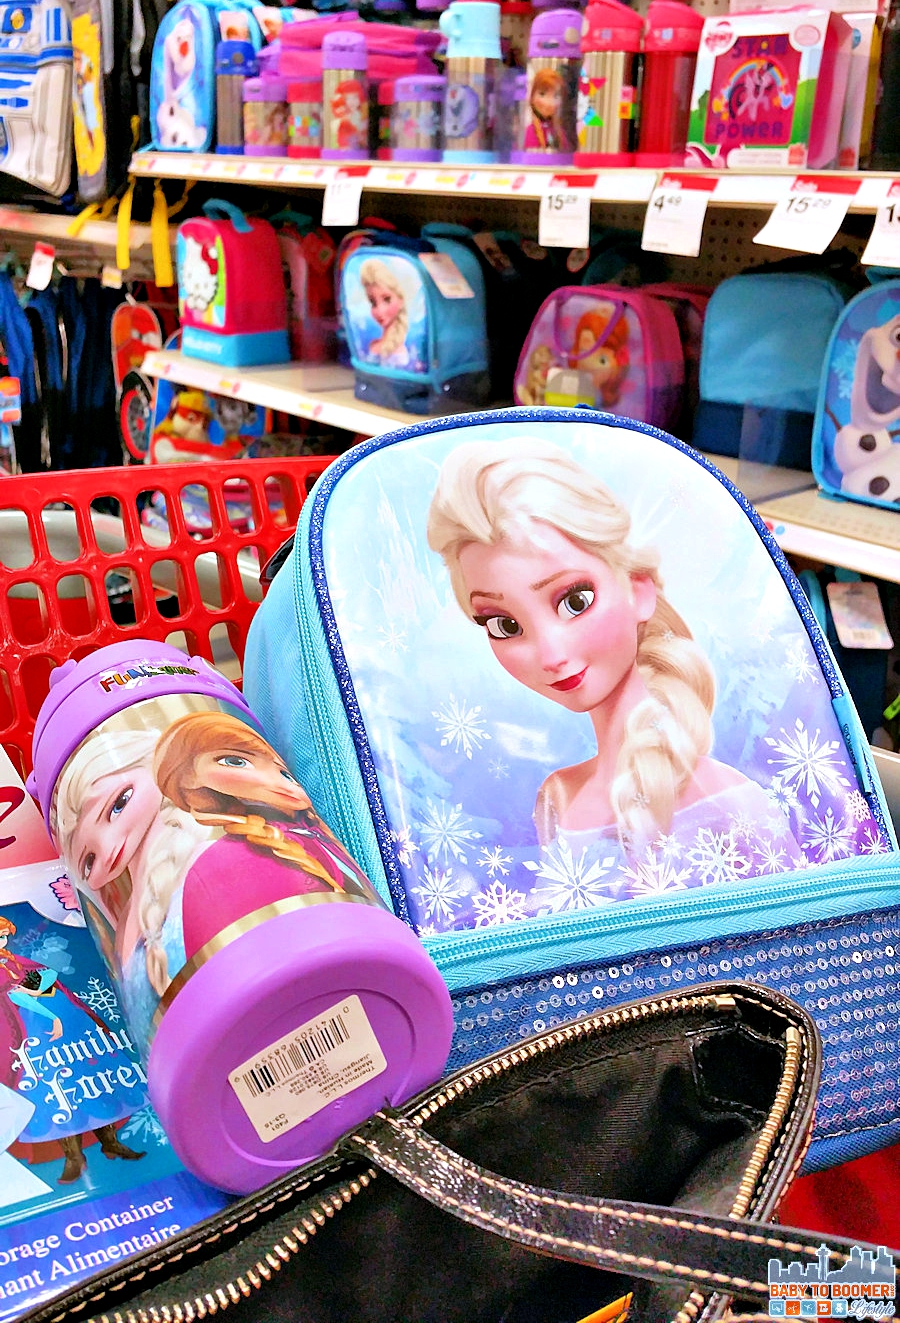 https://babytoboomer.com/wp-content/uploads/2015/08/frozen-lunchbag-shopping-at-target.jpg